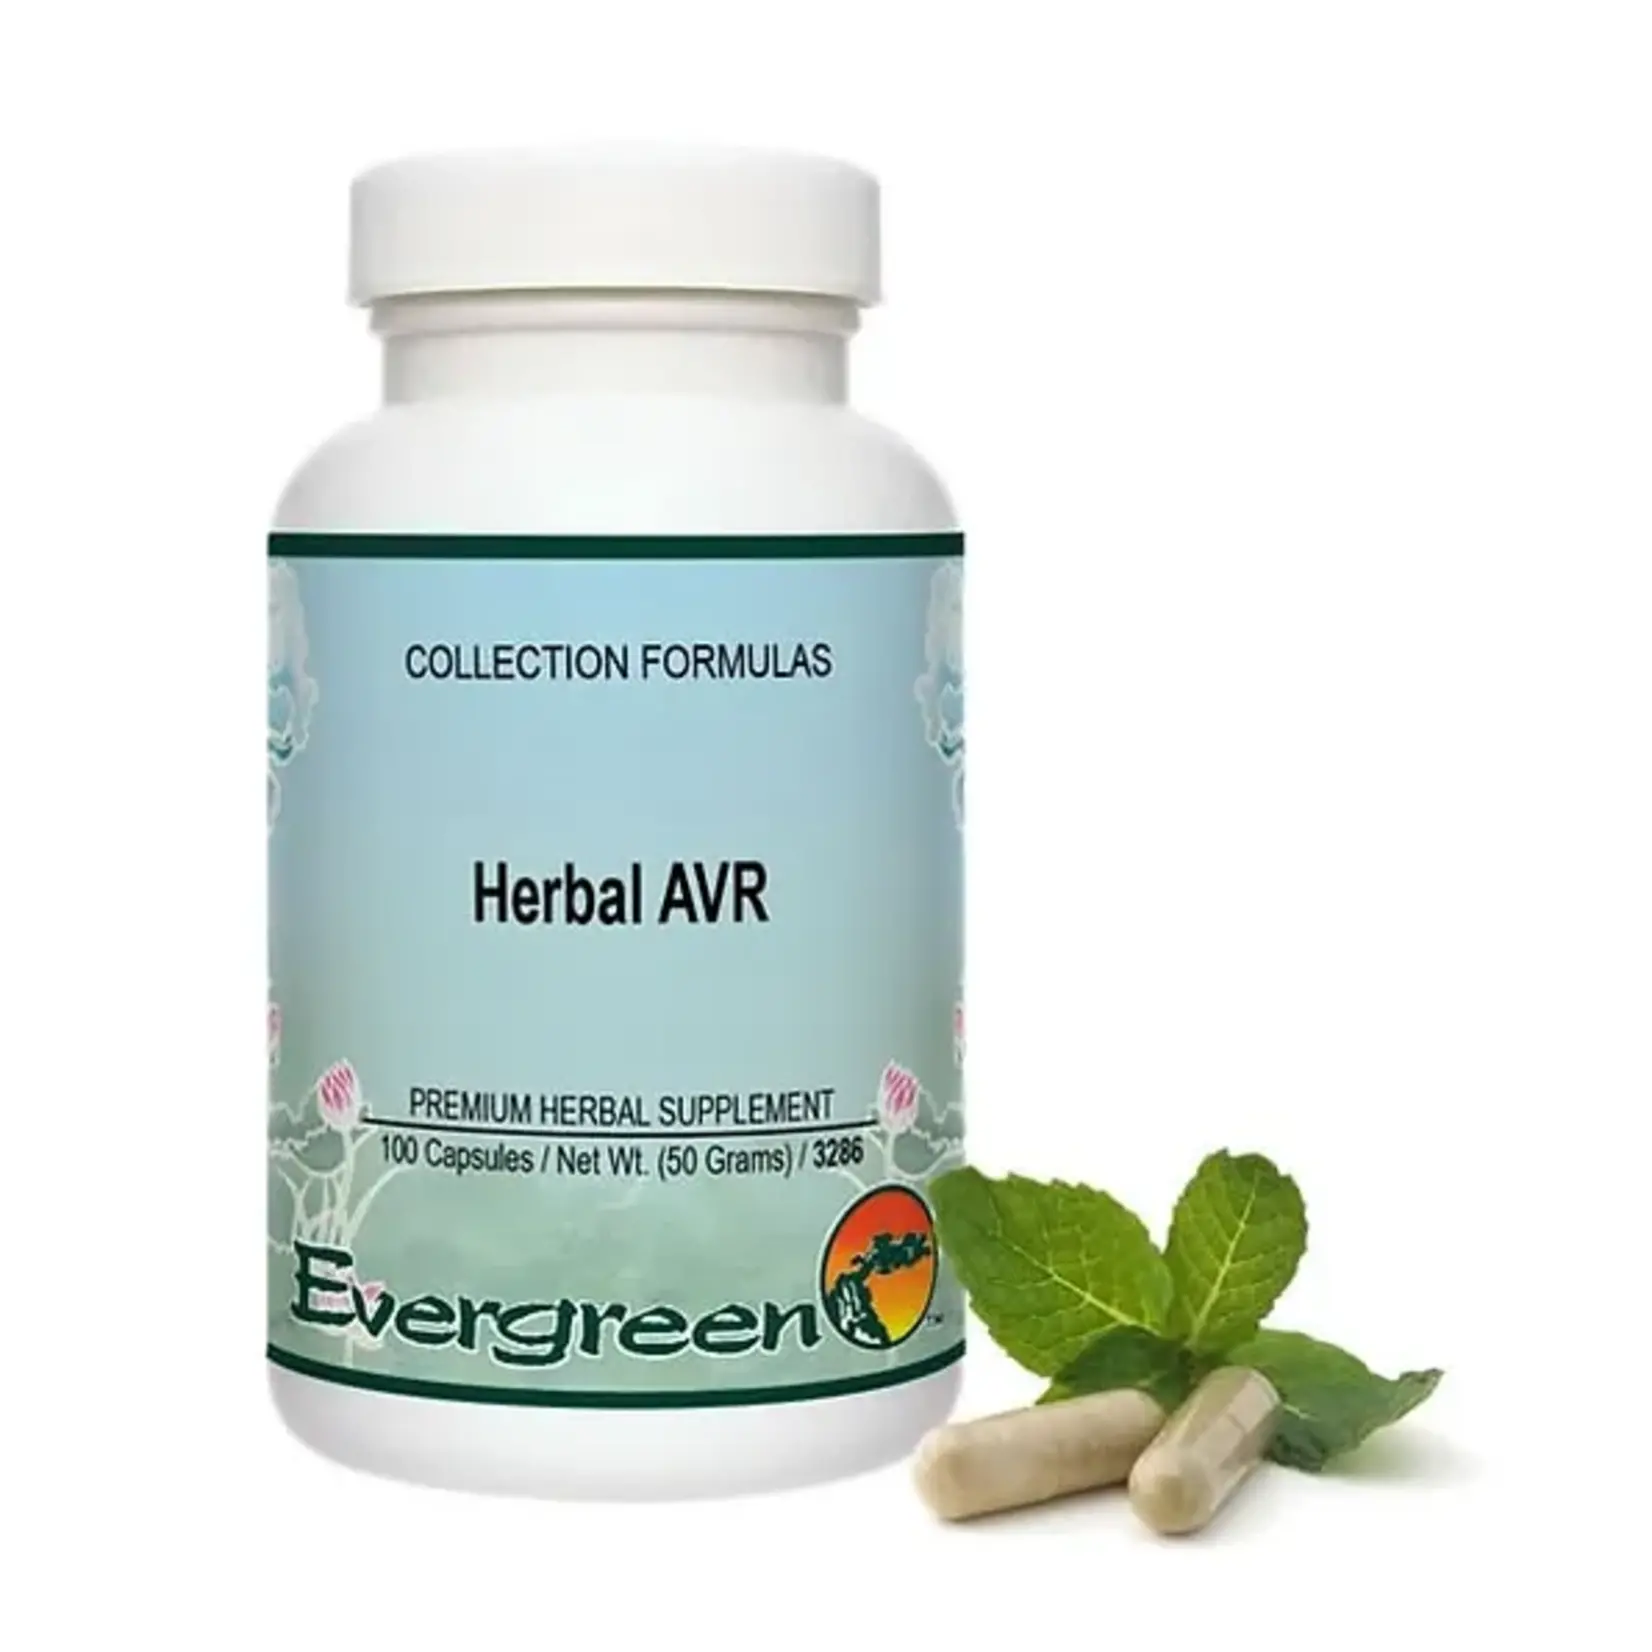 Herbal AVR (Evergreen Herbs)